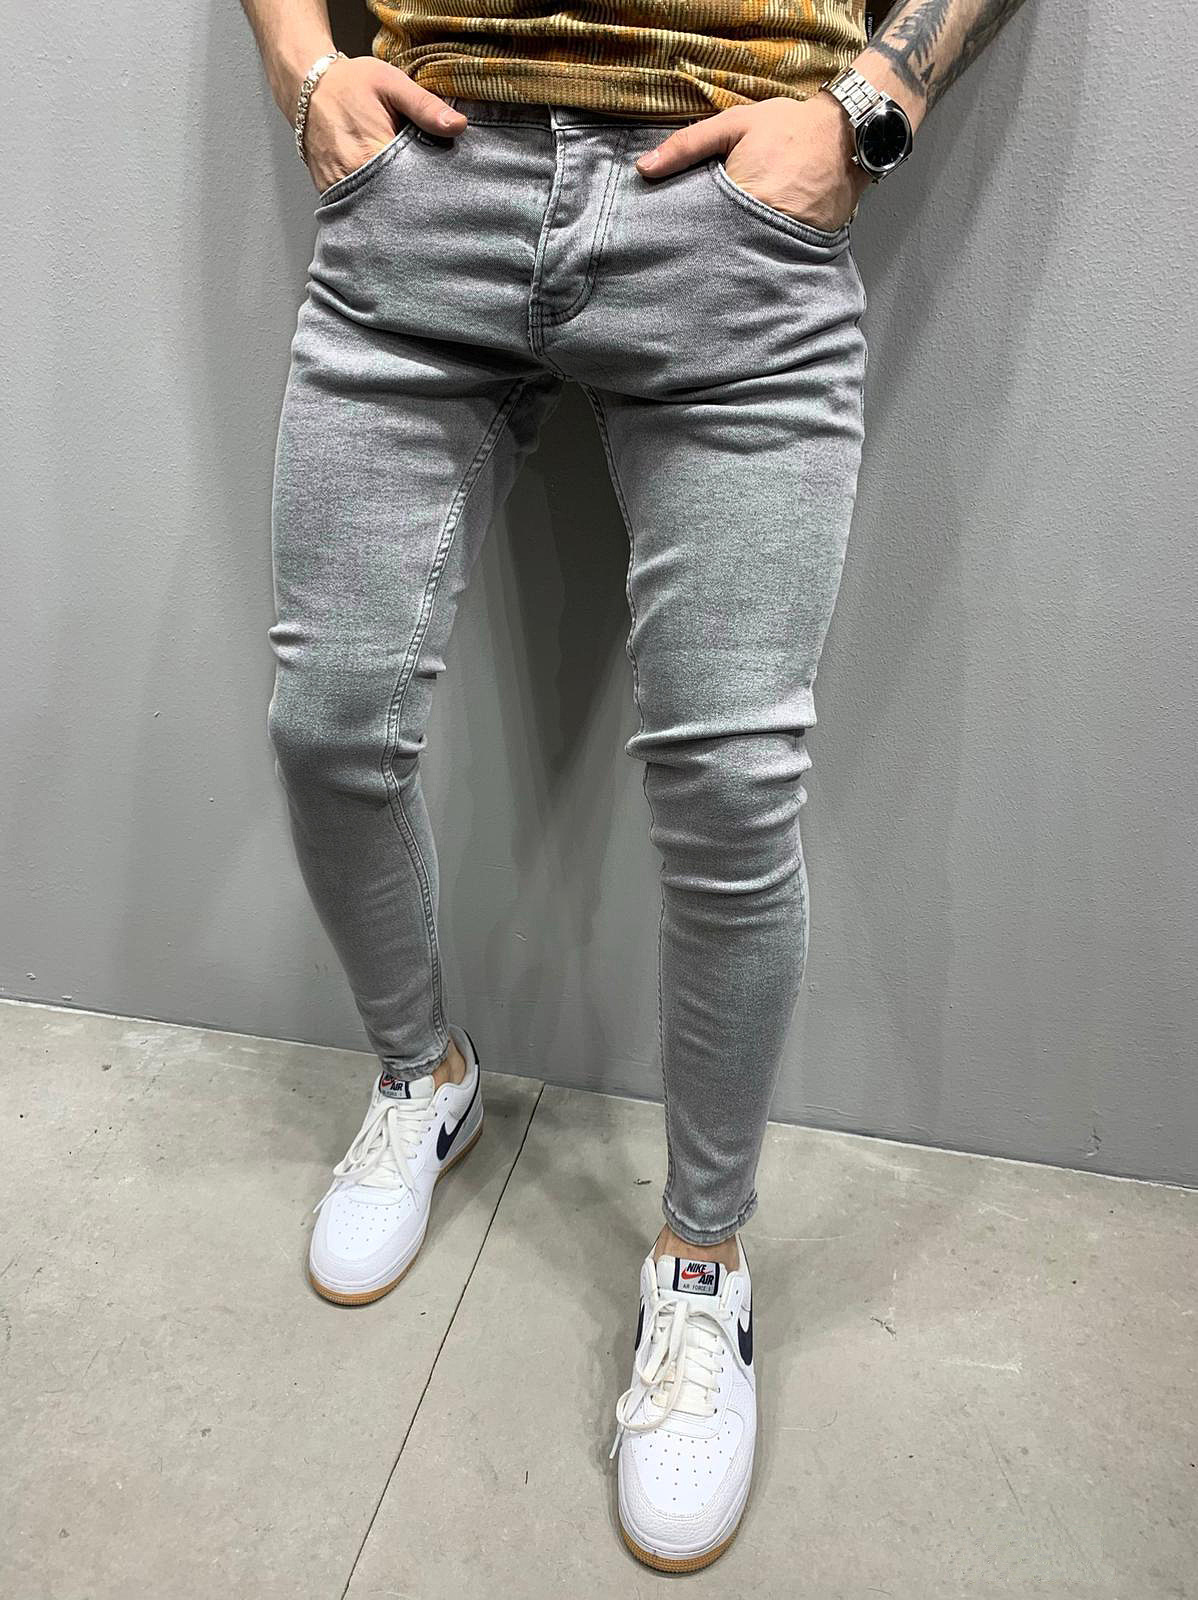 High-quality European And American Men's Elastic Skinny Jeans